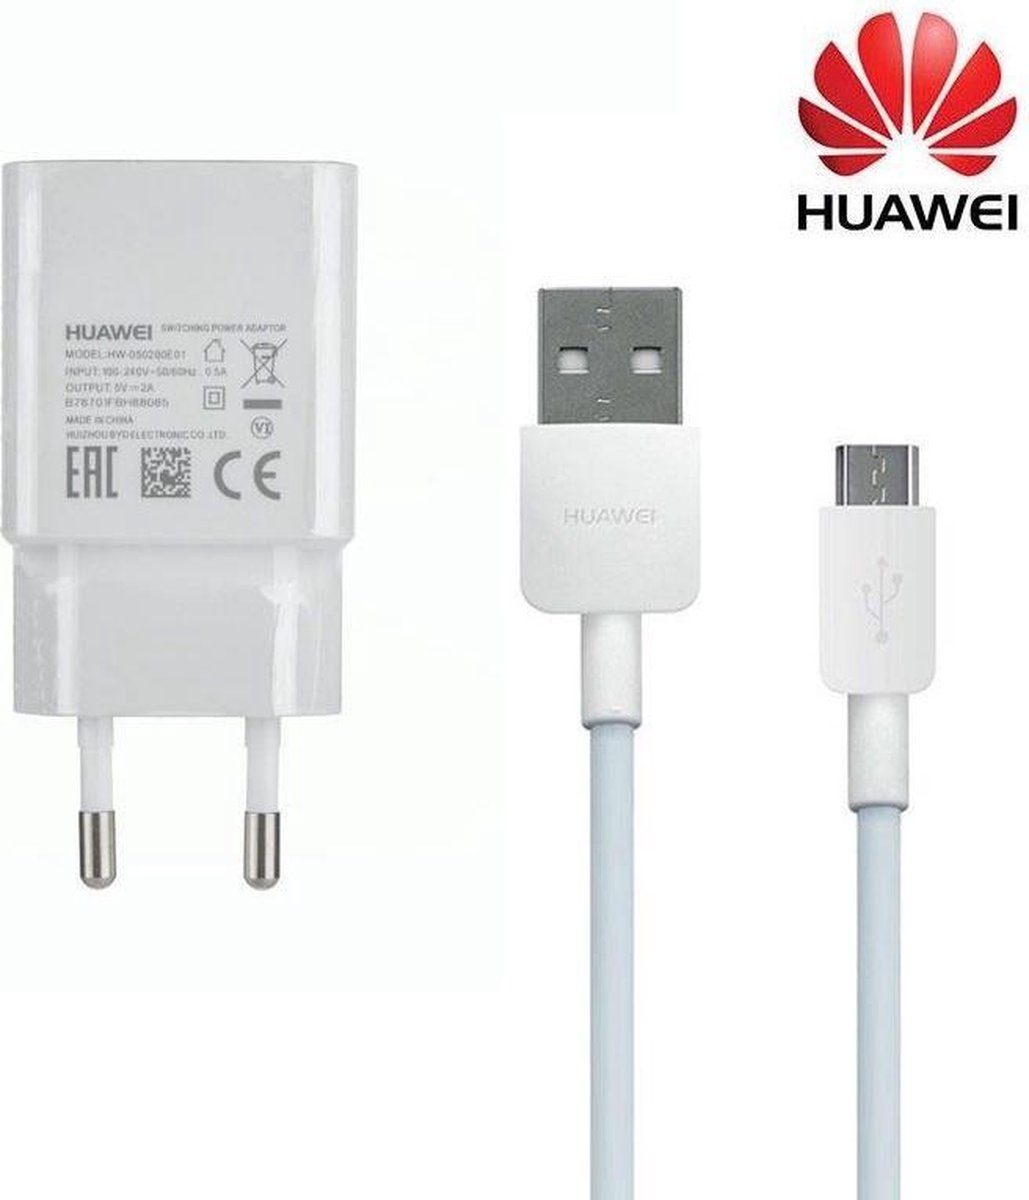 Huawei device телефон. Зарядка Huawei hw-050200e02. Адаптер Huawei hw-050200e01. Сетевая зарядка Huawei ap32 + кабель MICROUSB. Hw-050200e01.